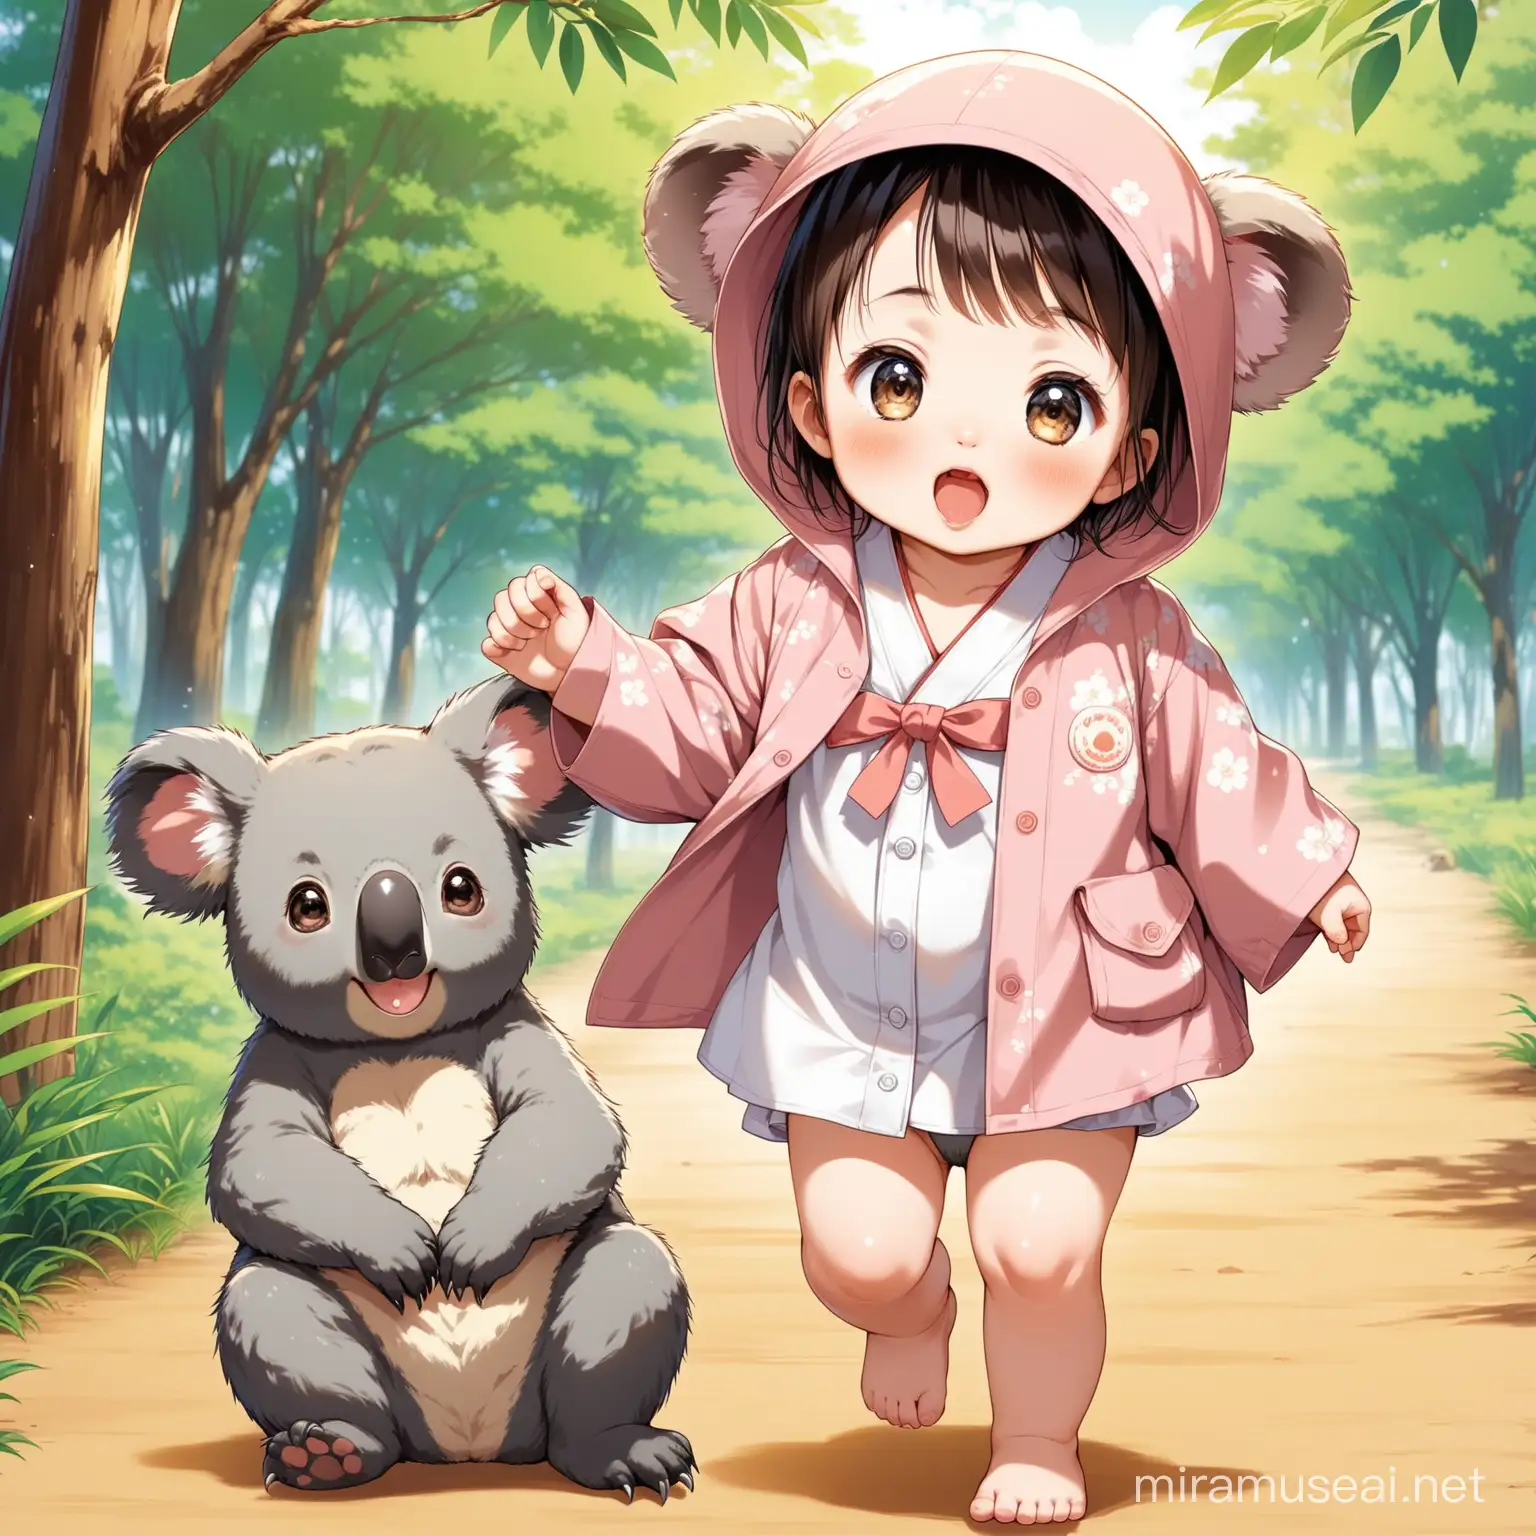 a japanese baby going to an adventure in australia, please make her walking around, add animals like kangaroo and koalas 